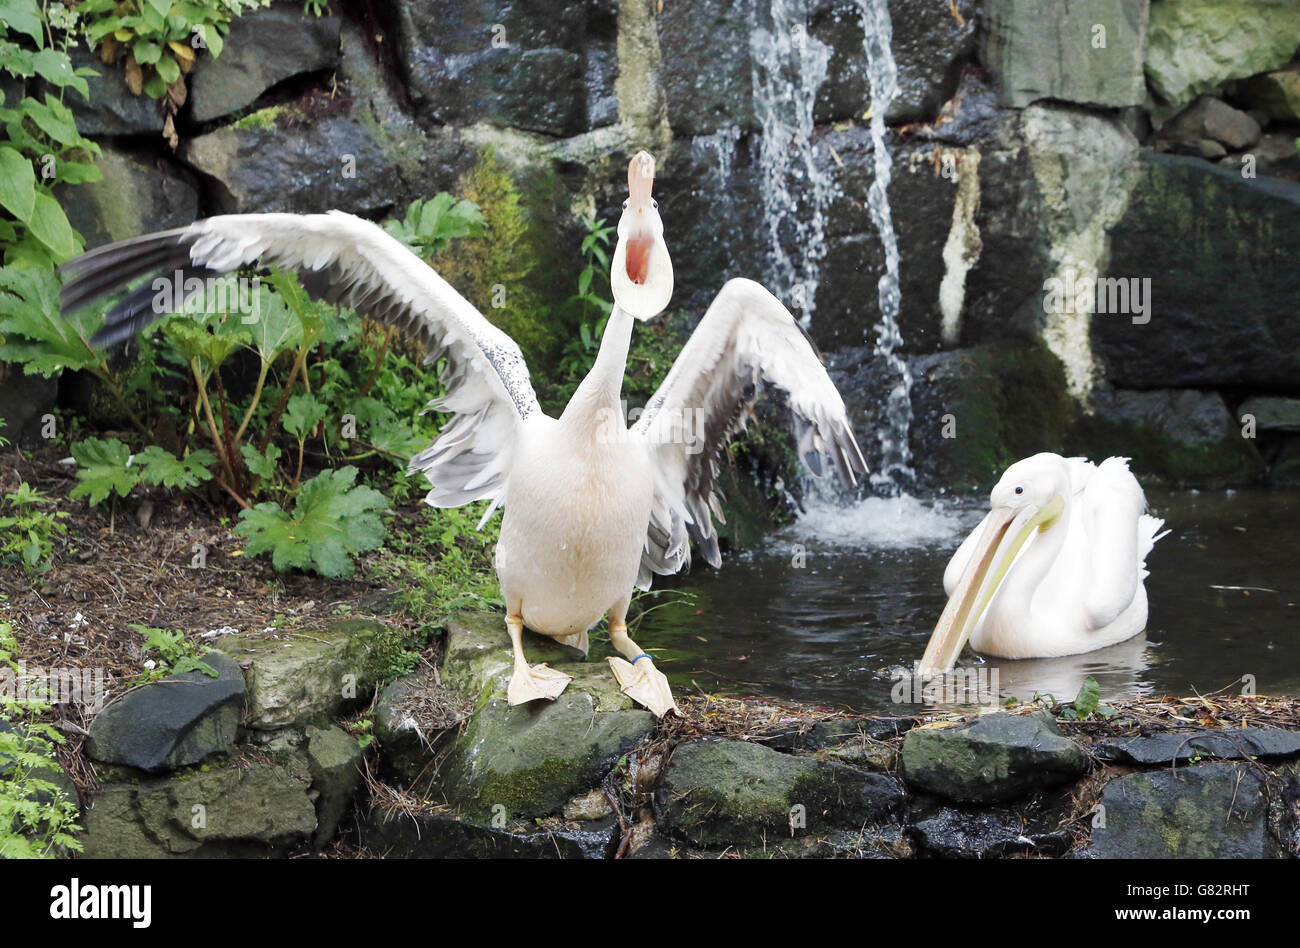 Pelicans in the new Pelican Walkthrough exhibit at Edinburgh Zoo in Scotland. Stock Photo